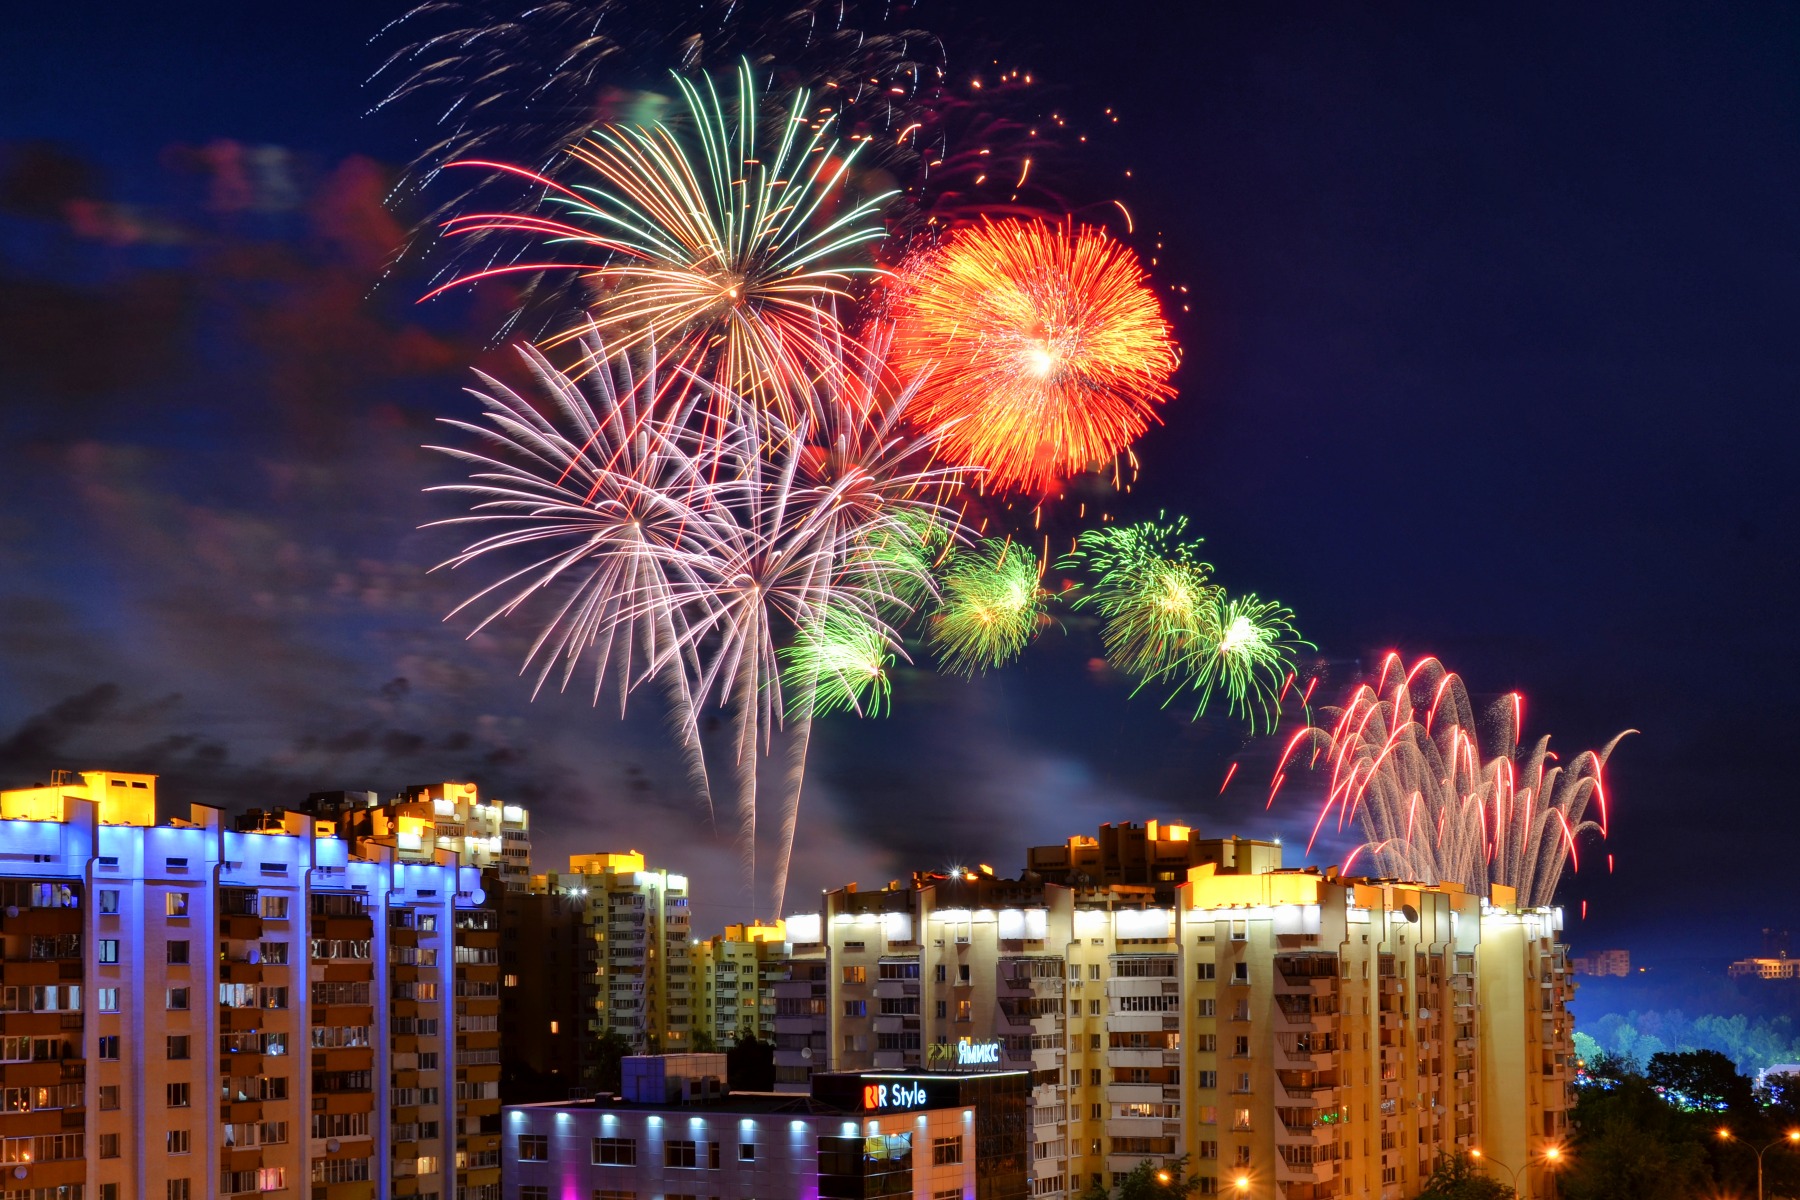 День независимости | Фотограф Александр Кузнецов | foto.by фото.бай